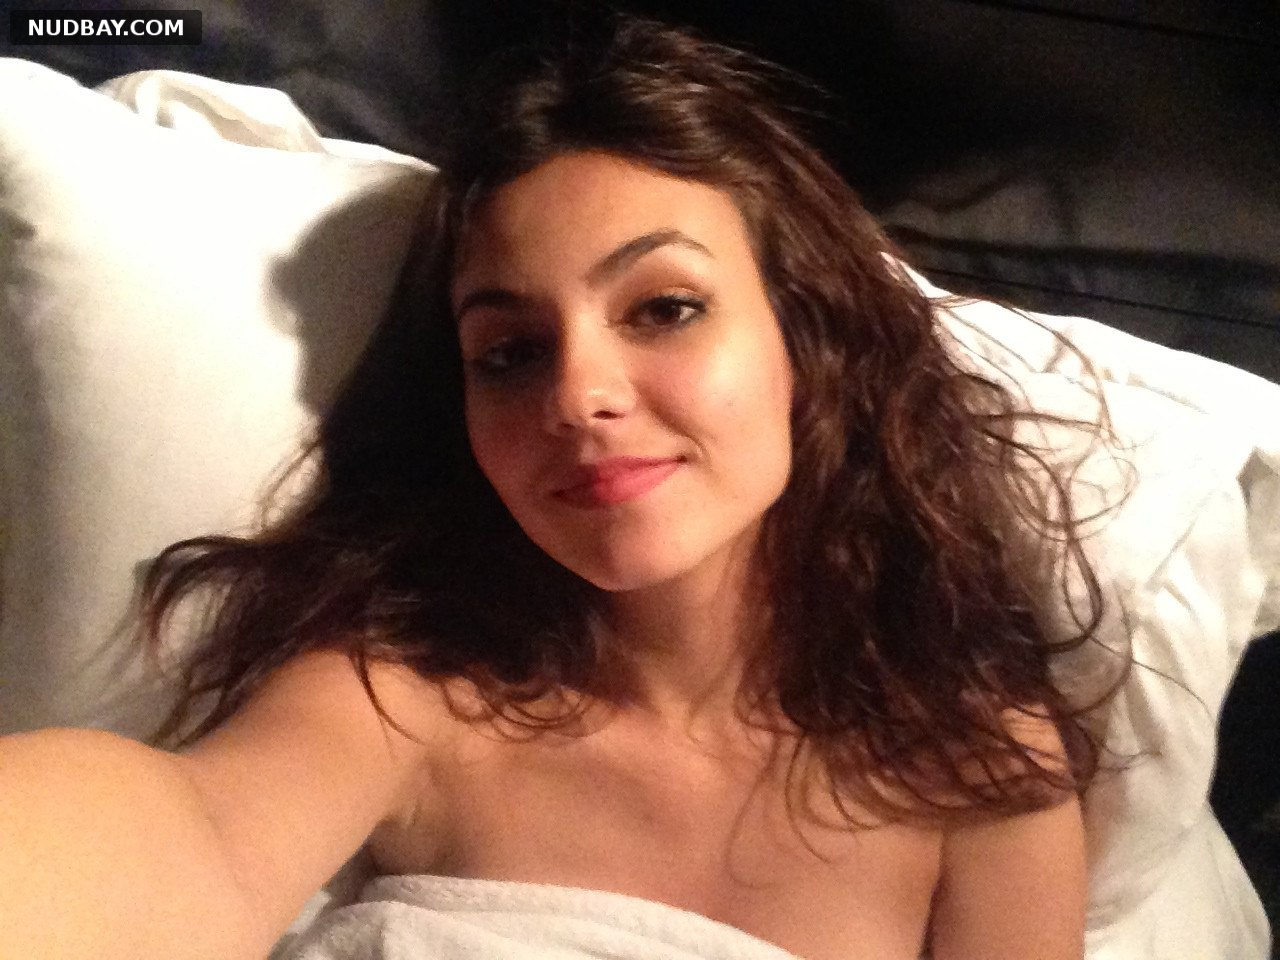 Victoria Justice nude selfie hot pics at home 2014